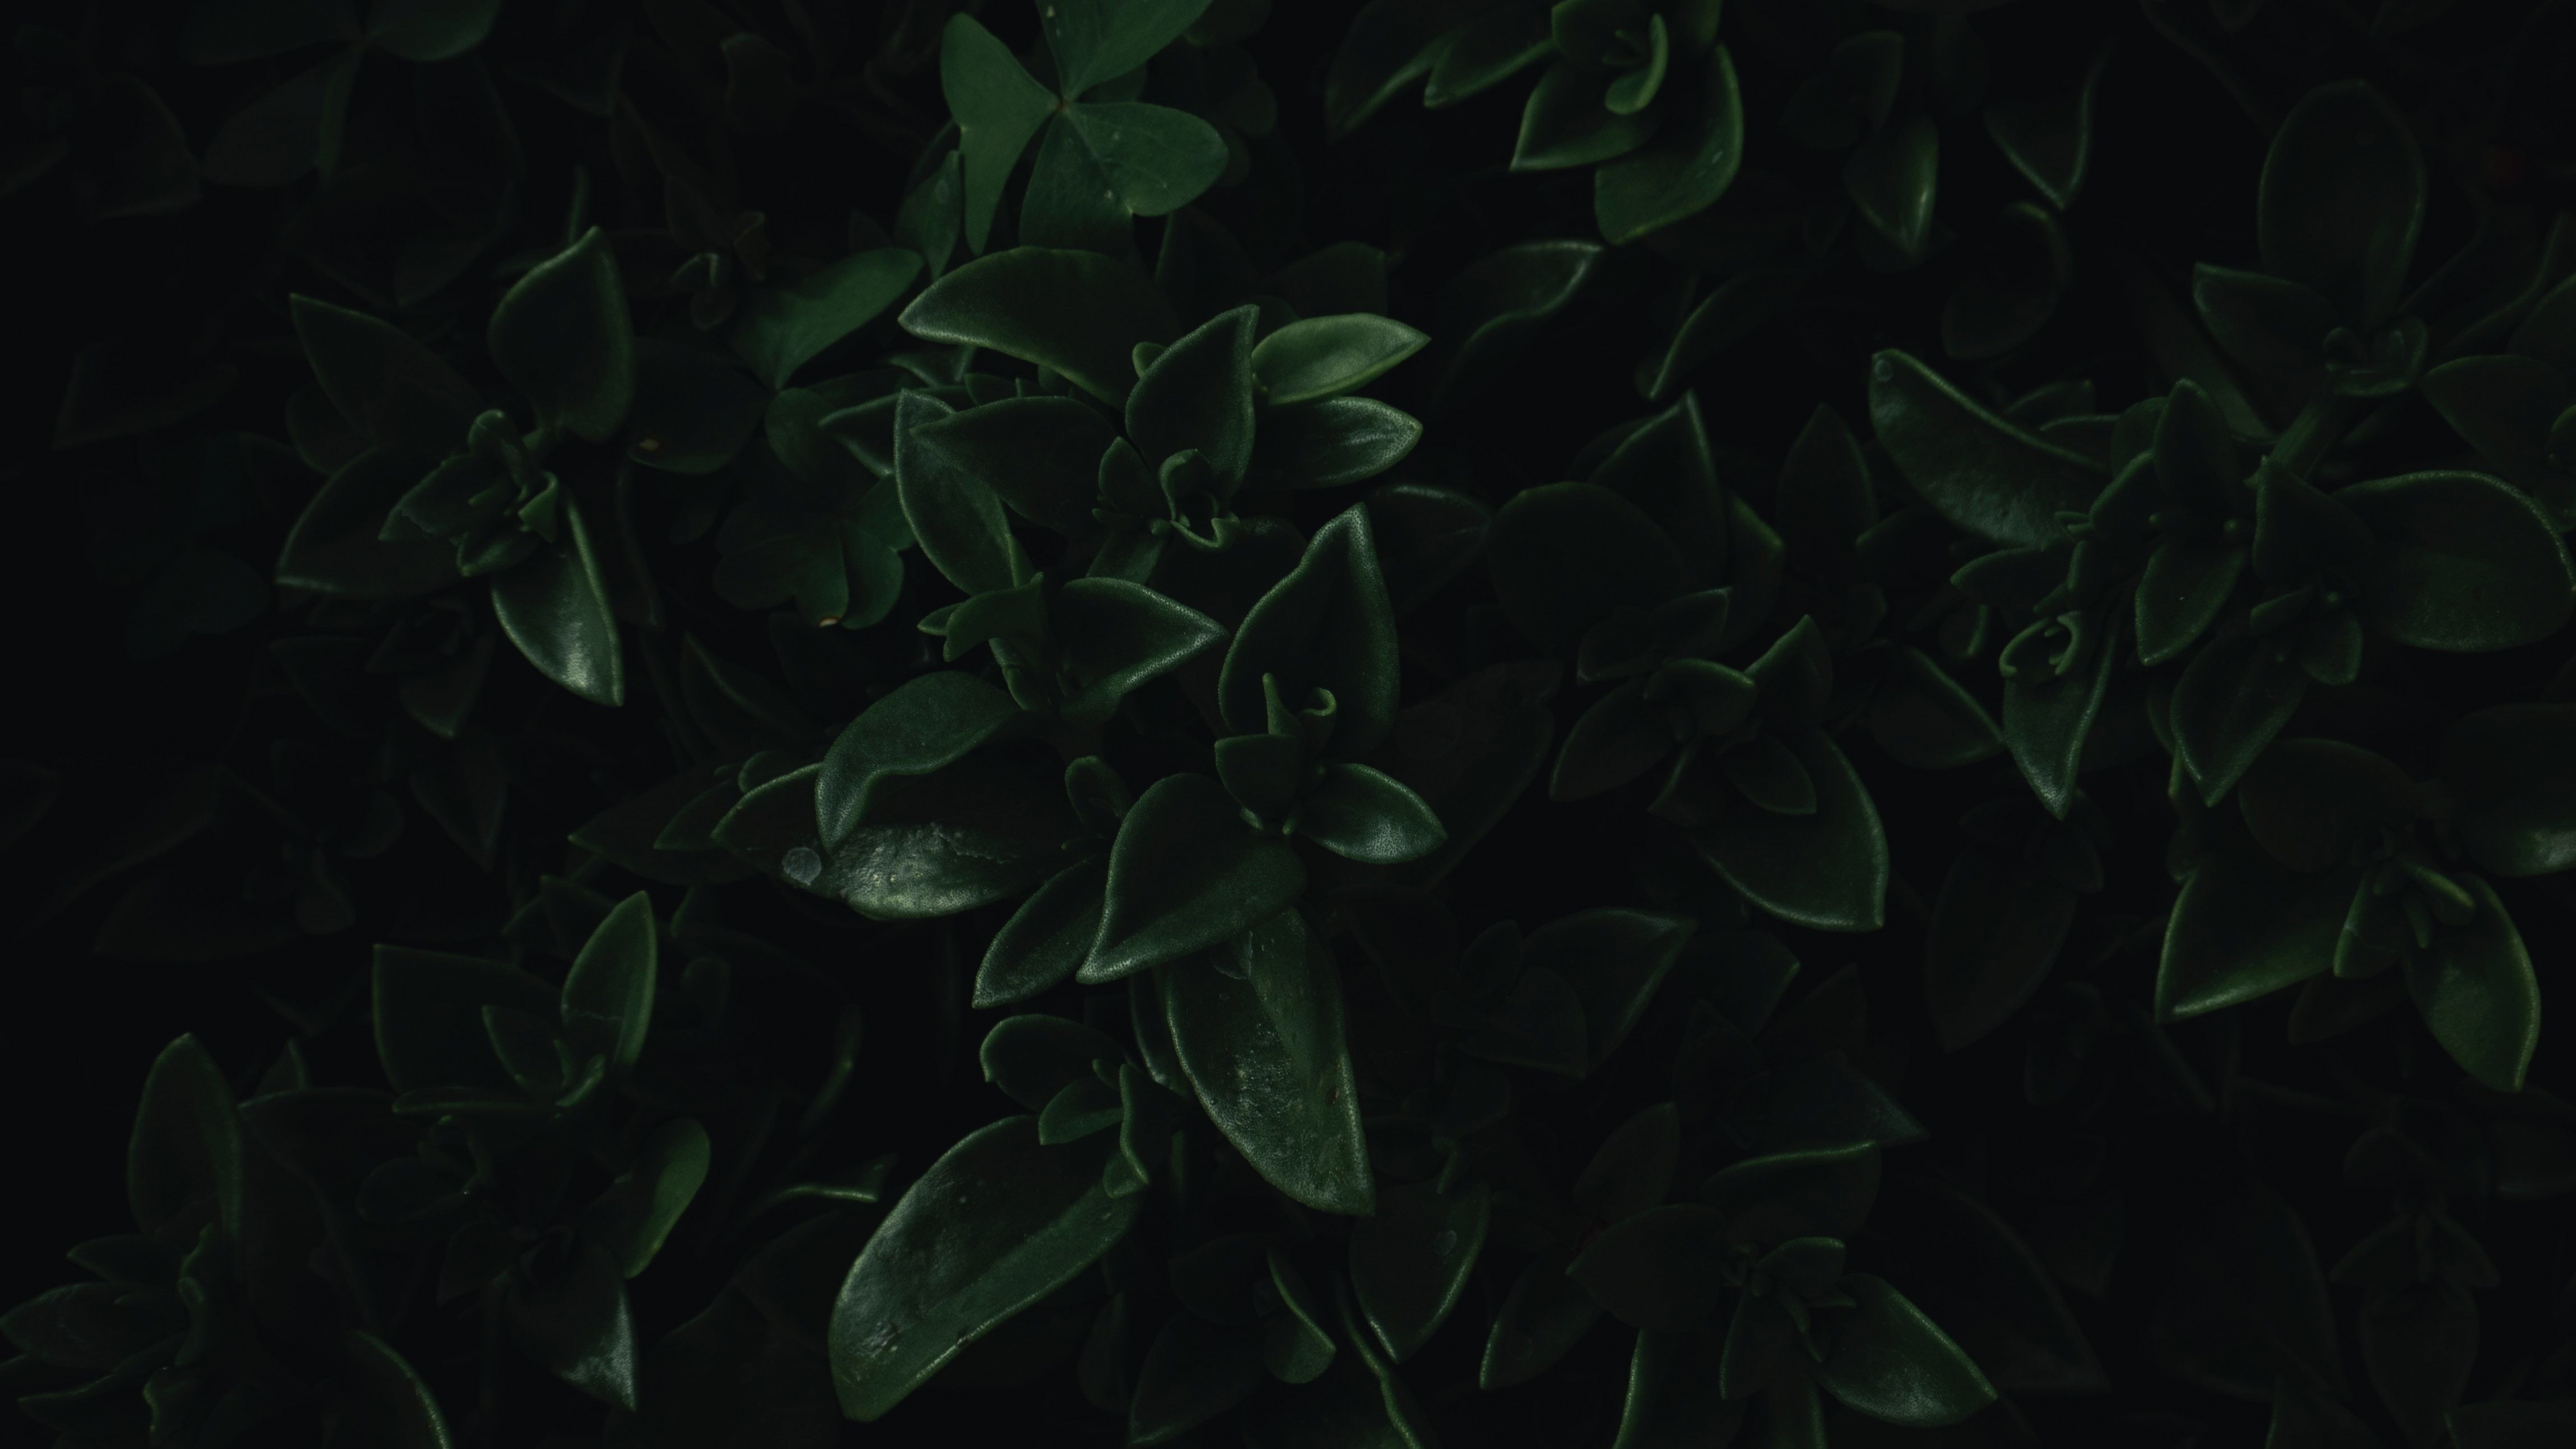 Free download Download 3840x2160 green leaves close up dark portrait 4k [3840x2160] for your Desktop, Mobile & Tablet. Explore 4K Leaves Wallpaper. Red Leaves Wallpaper, Wallpaper Fall Leaves, Autumn Leaves Background